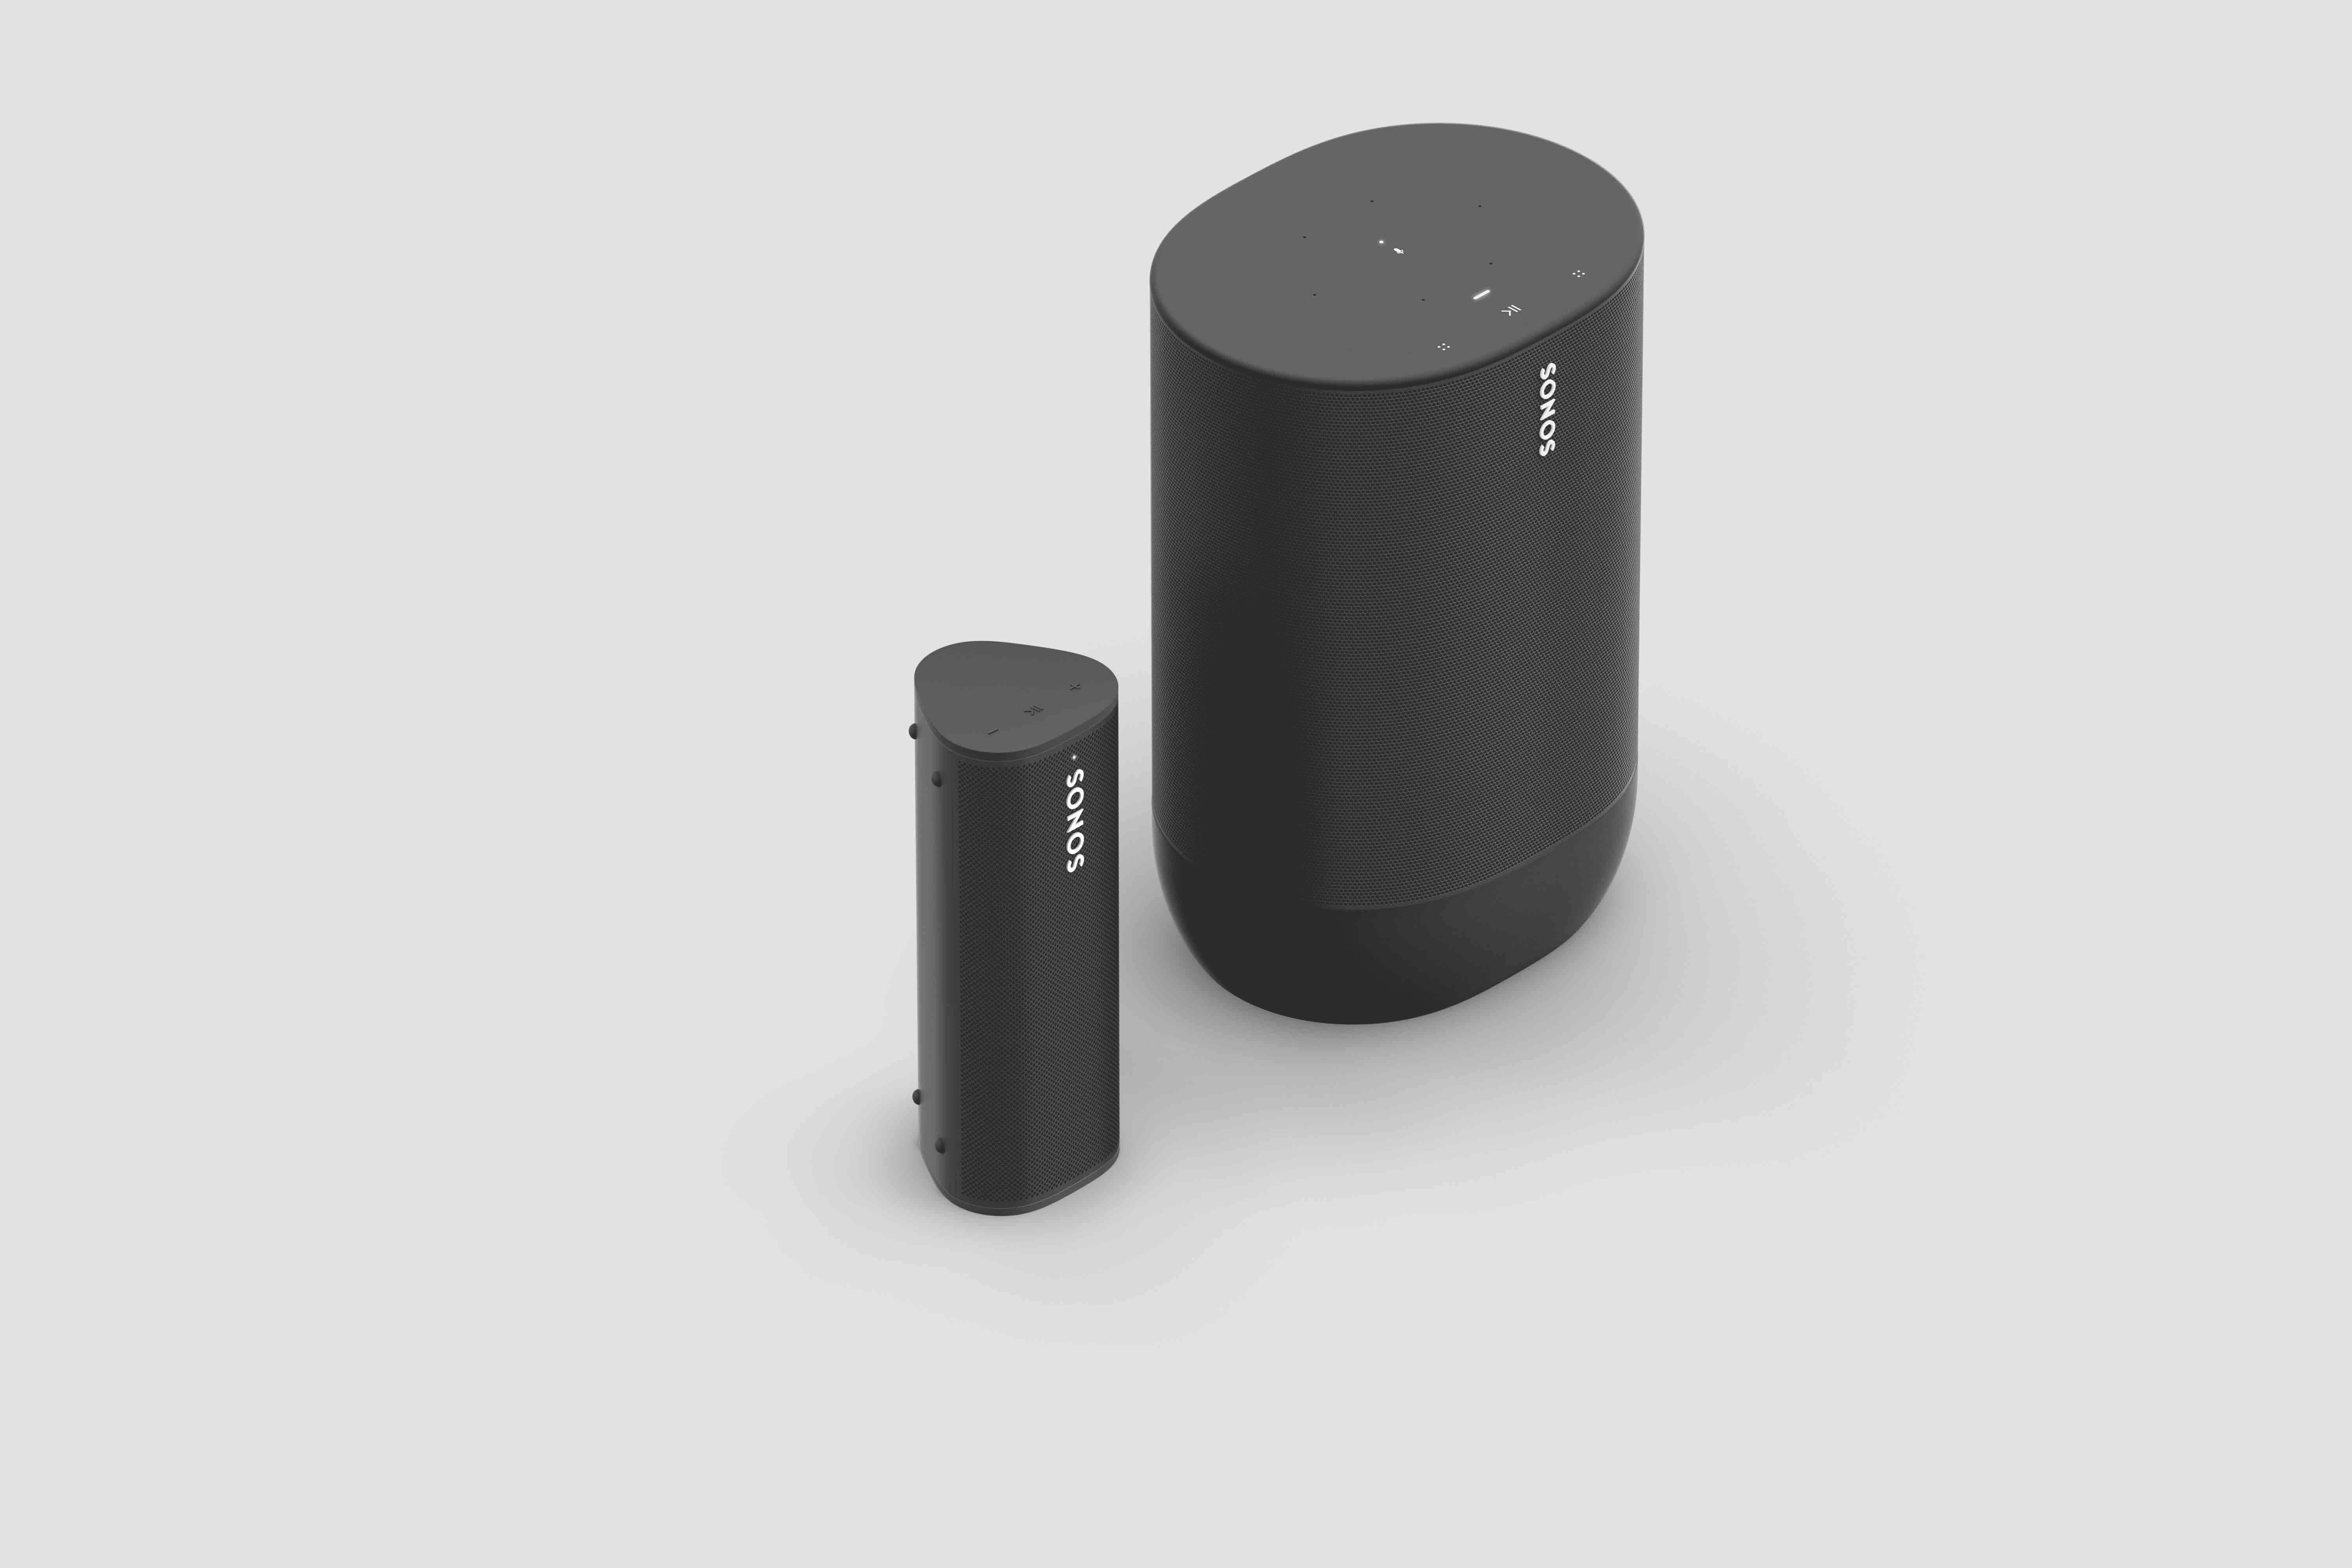 Meet Roam, the ultra-portable smart speaker | Sonos Community